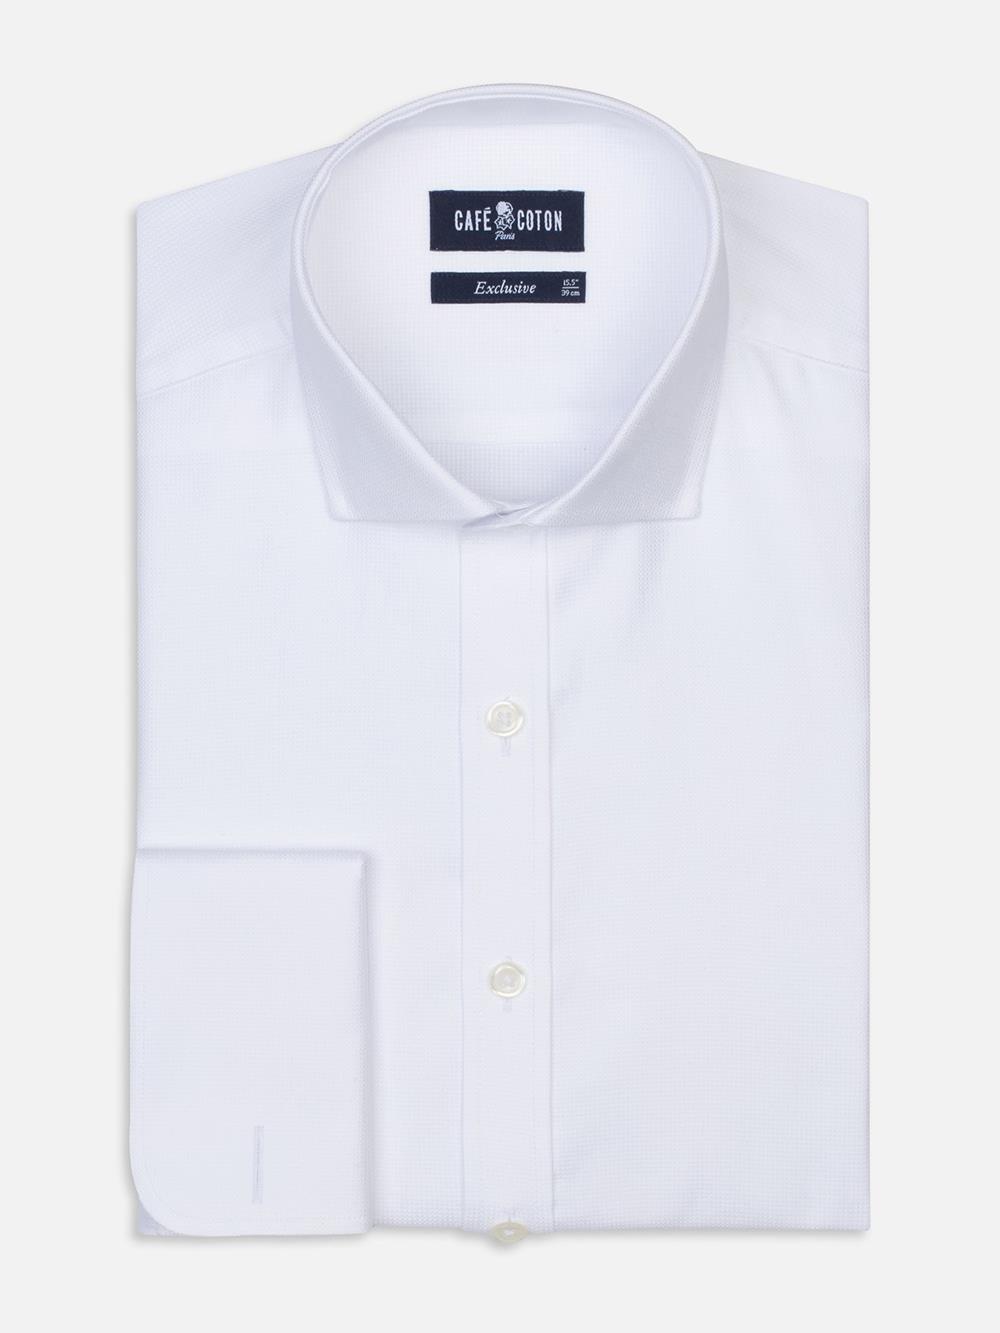 White textured shirt  - Double Cuffs